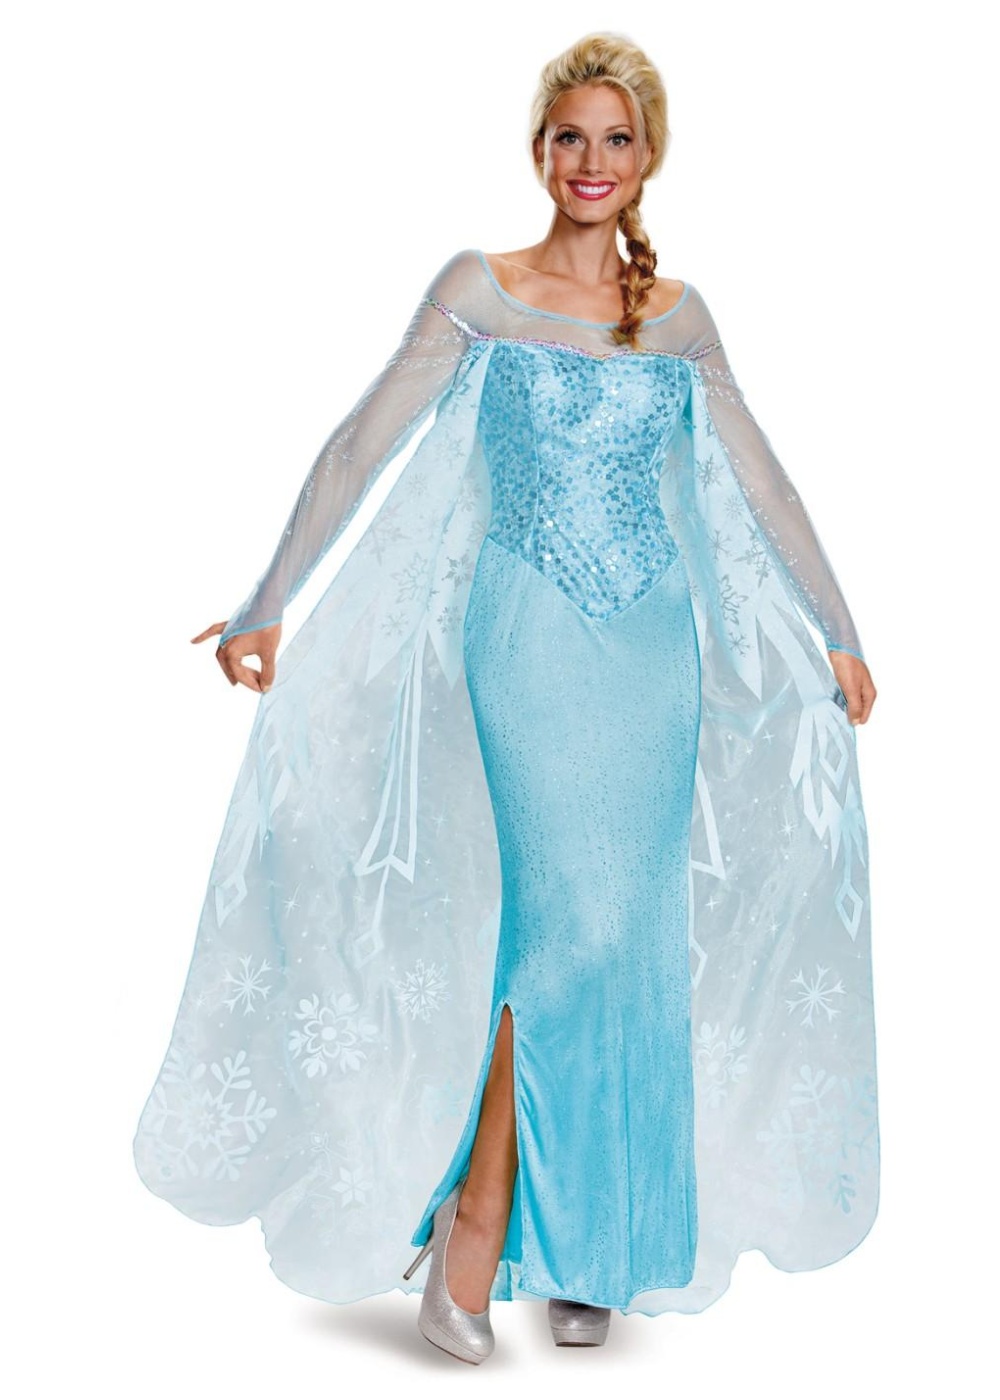 Princess Elsa Costume